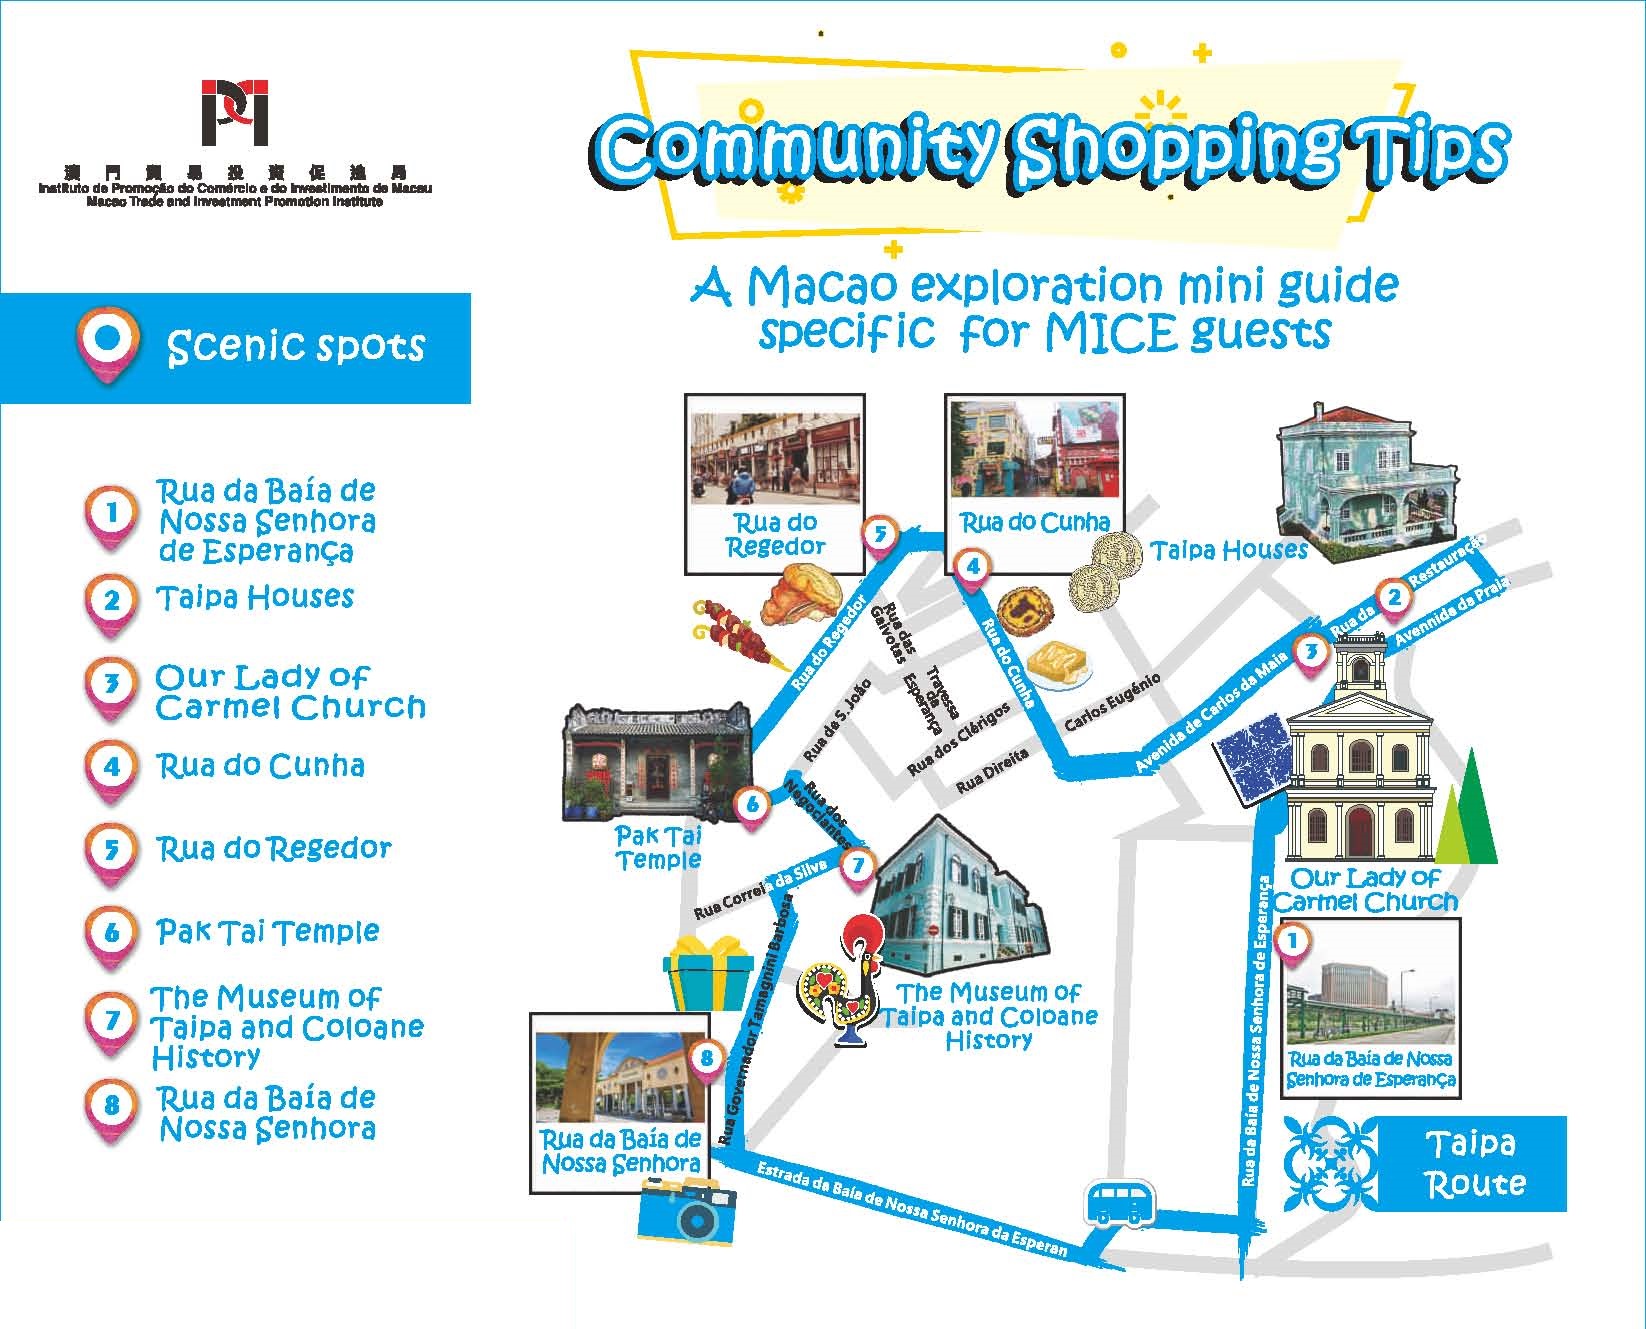 Macau Scenic spots - Taipa